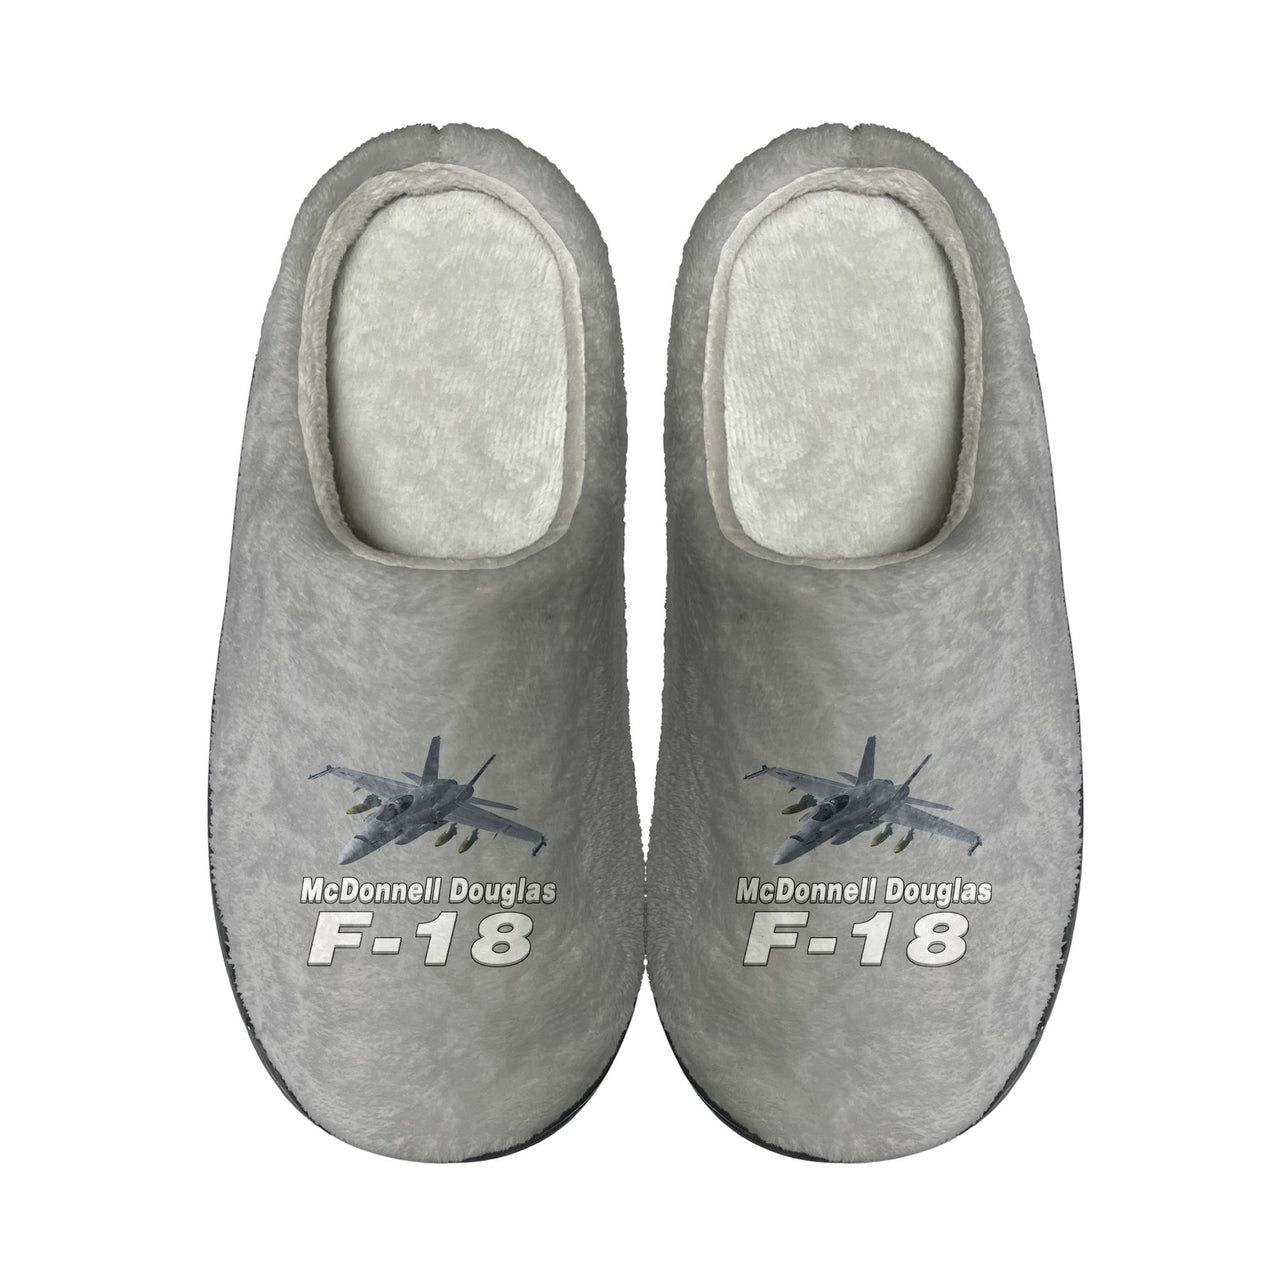 The McDonnell Douglas F18 Designed Cotton Slippers